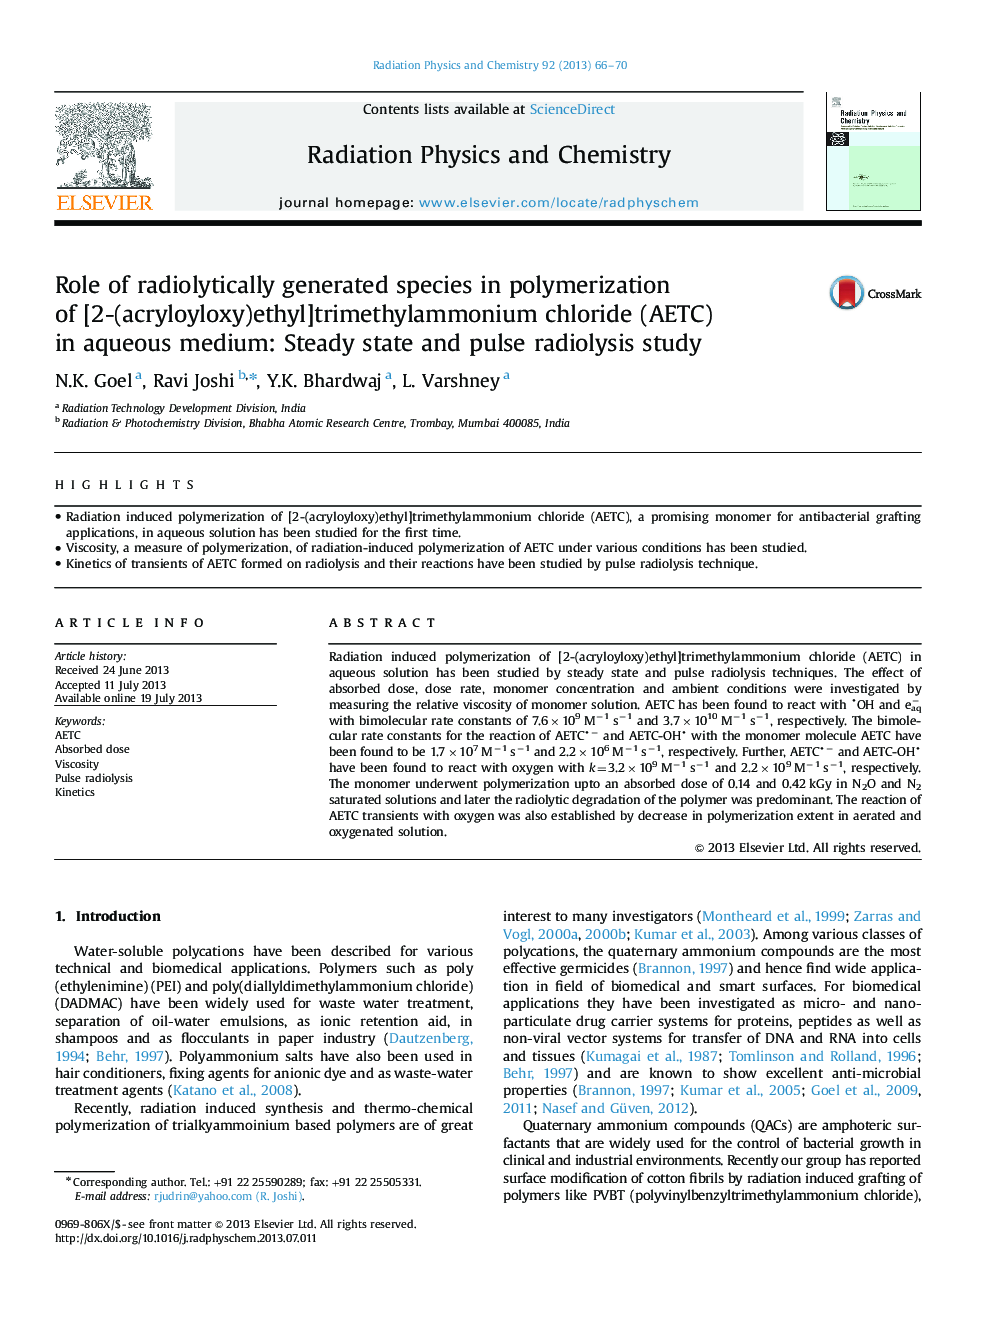 Role of radiolytically generated species in polymerization of [2-(acryloyloxy)ethyl]trimethylammonium chloride (AETC) in aqueous medium: Steady state and pulse radiolysis study